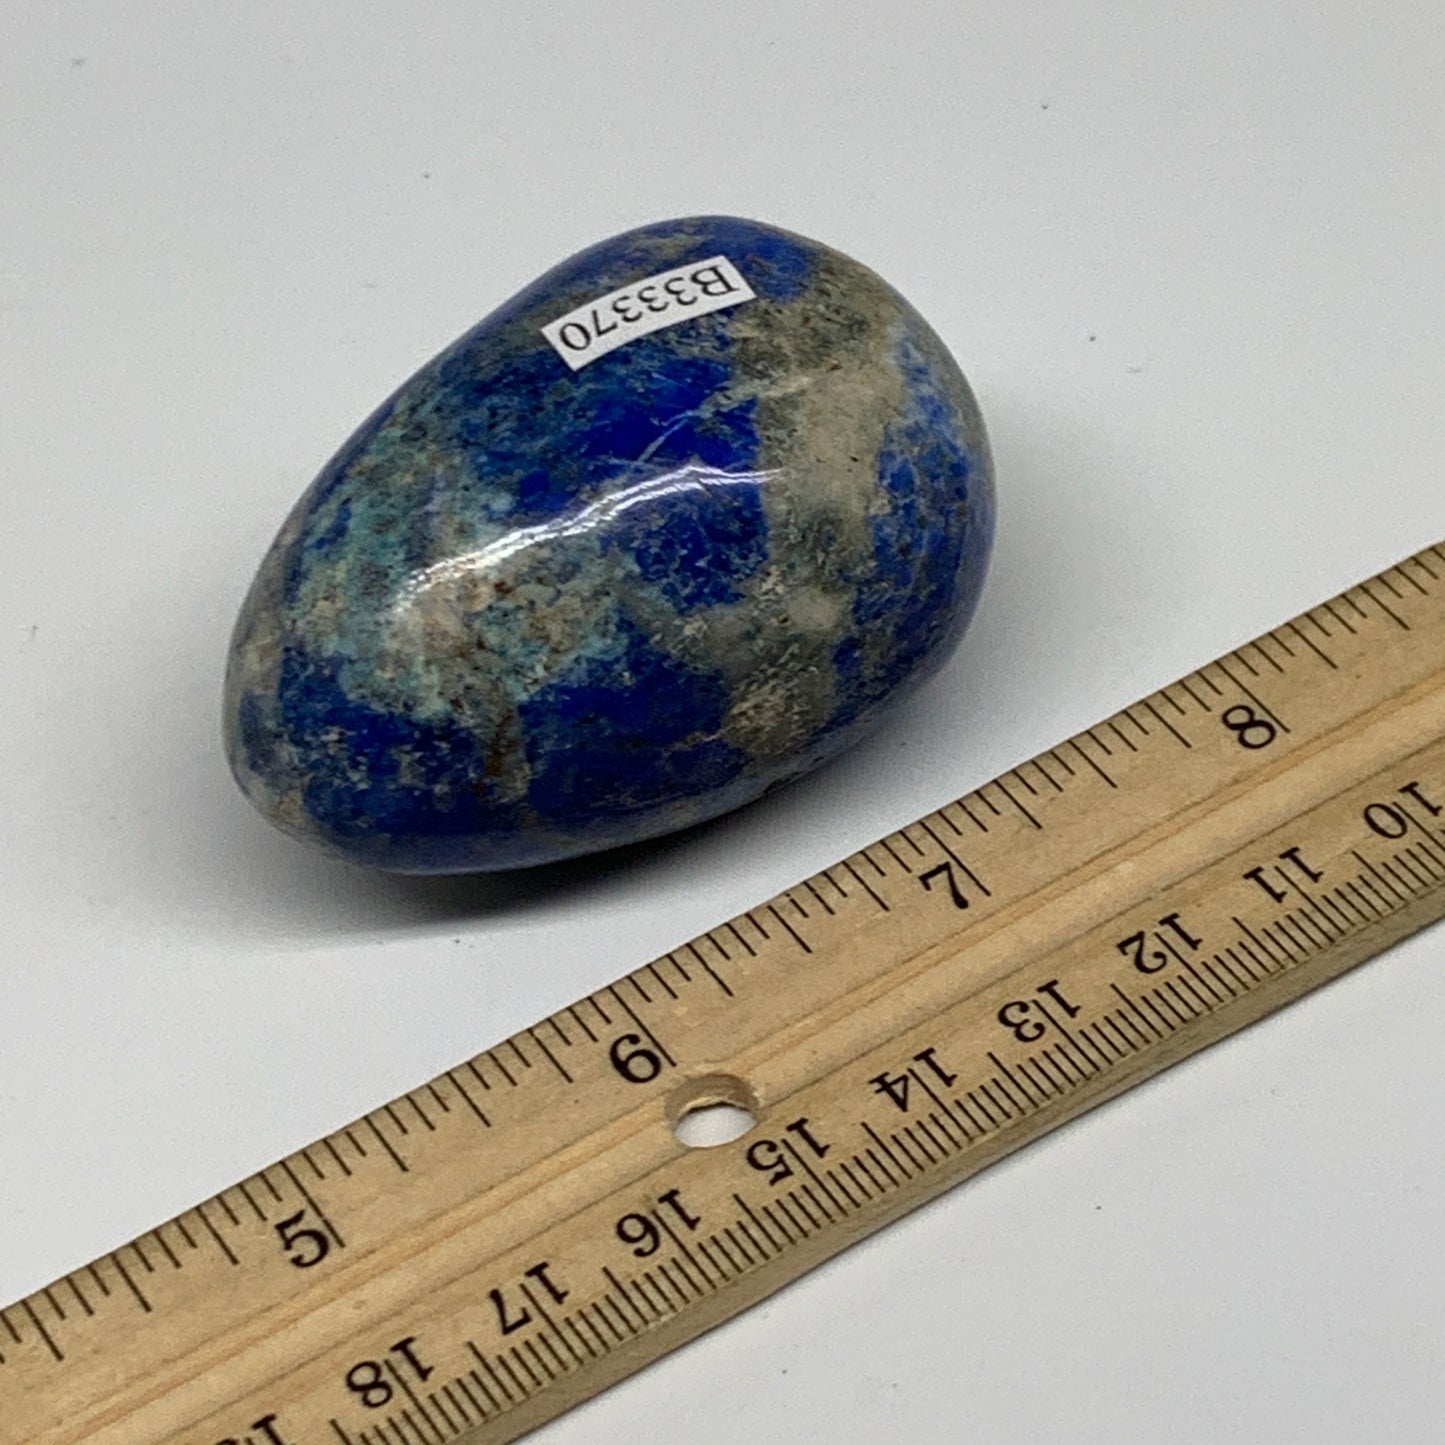 132.2g, 2.3"x1.5", Natural Lapis Lazuli Egg Polished, Clearance, B33370